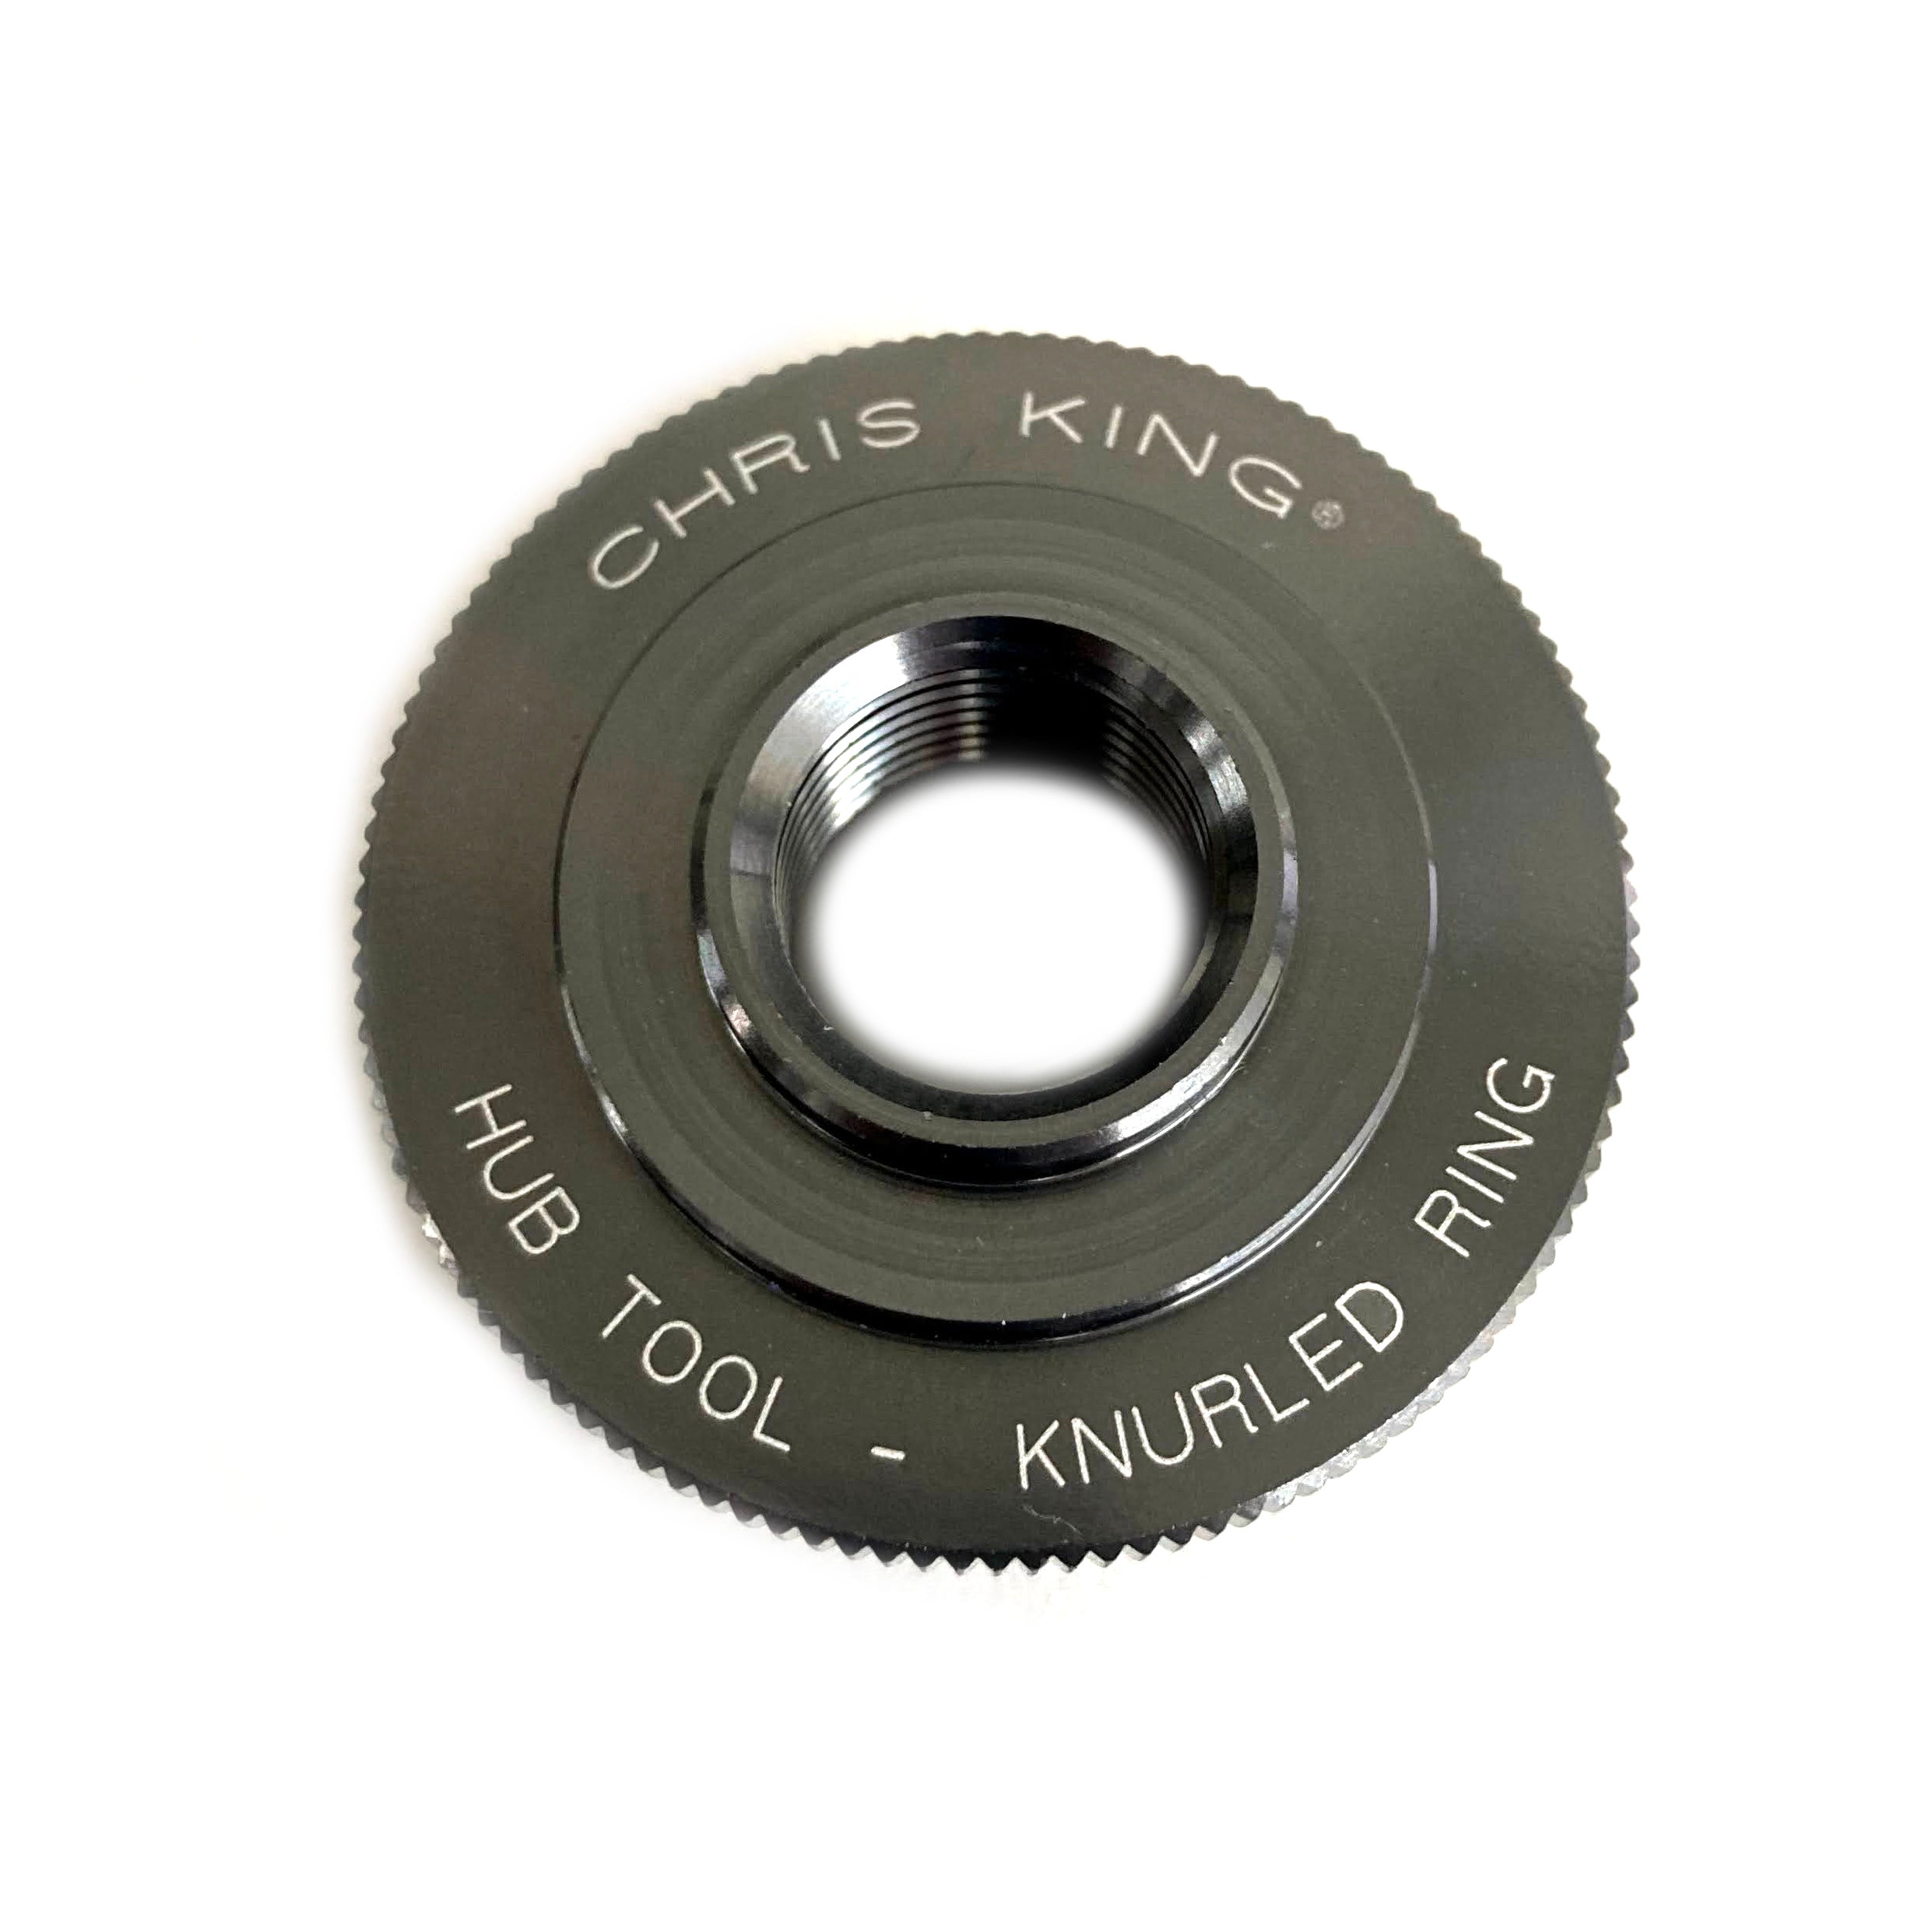 CHRIS KING Hub Service Tool Kit Standard